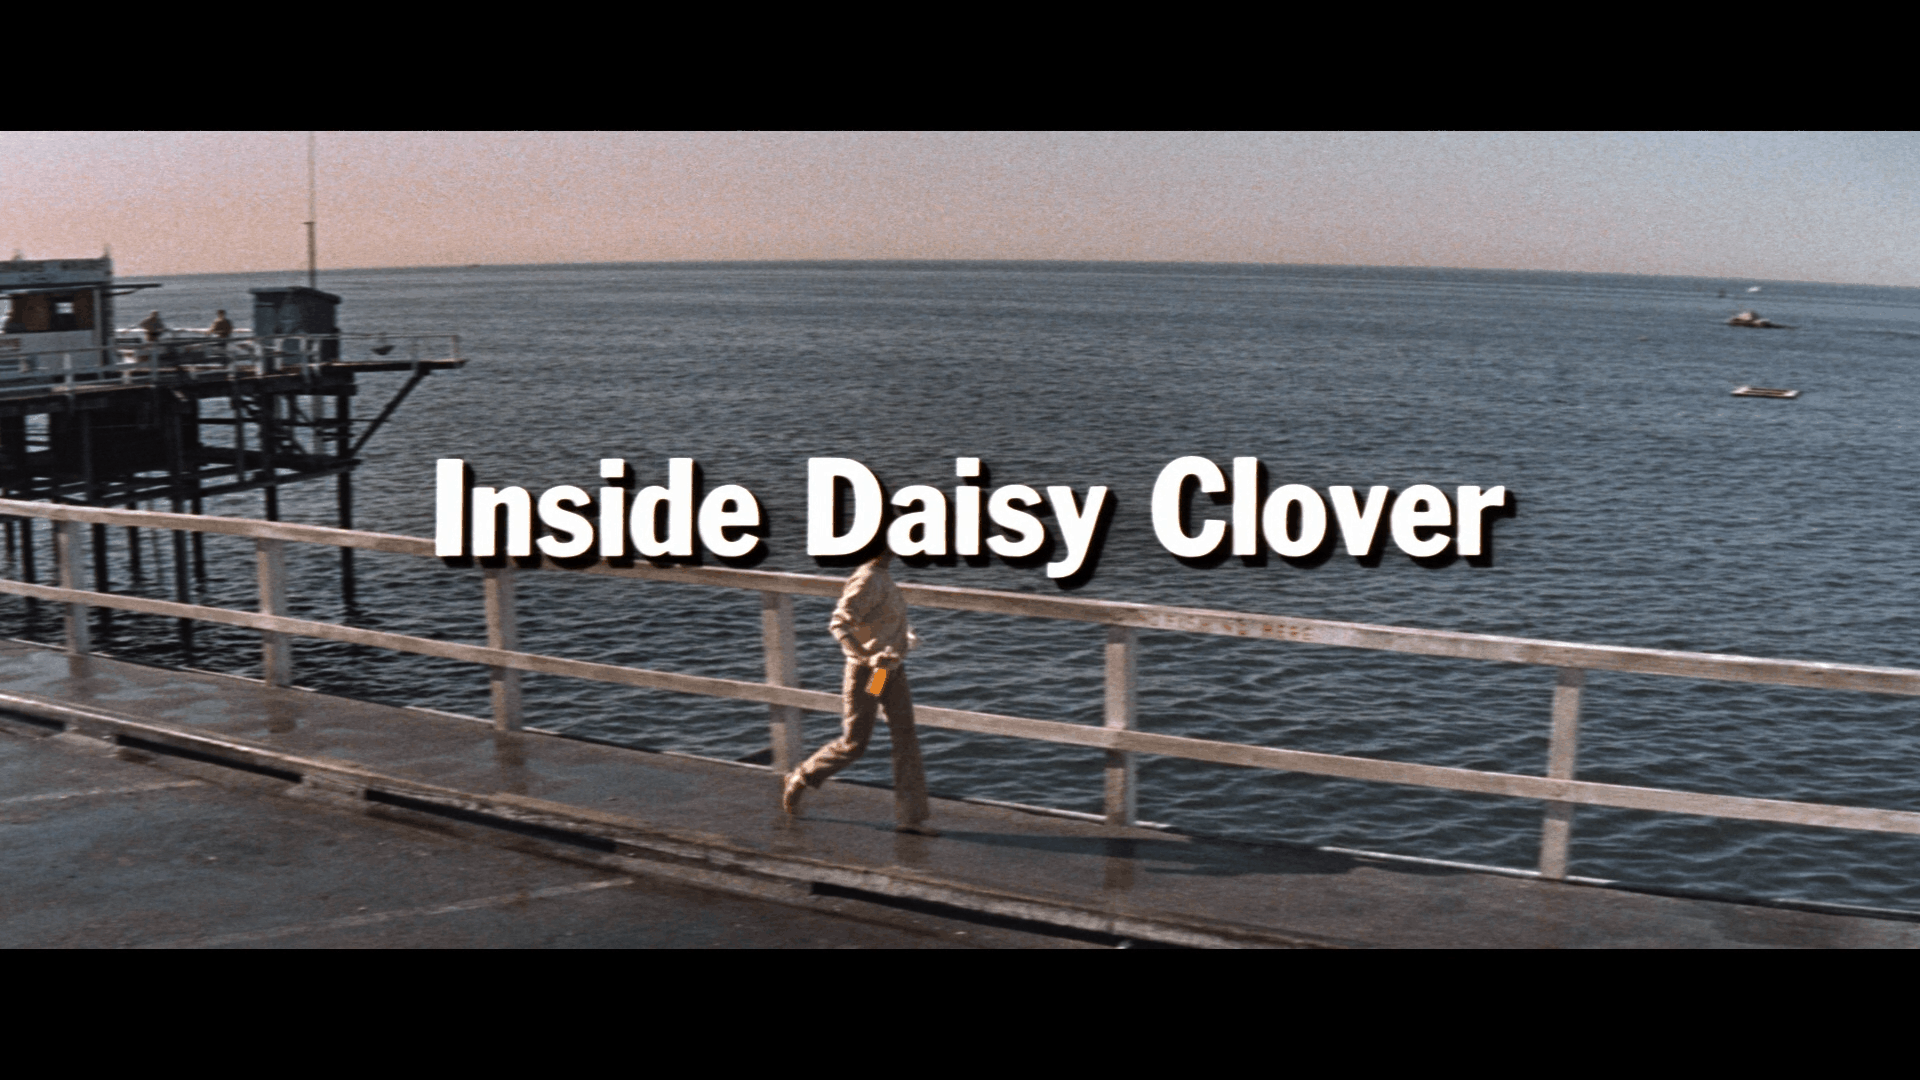 Inside Daisy Clover title